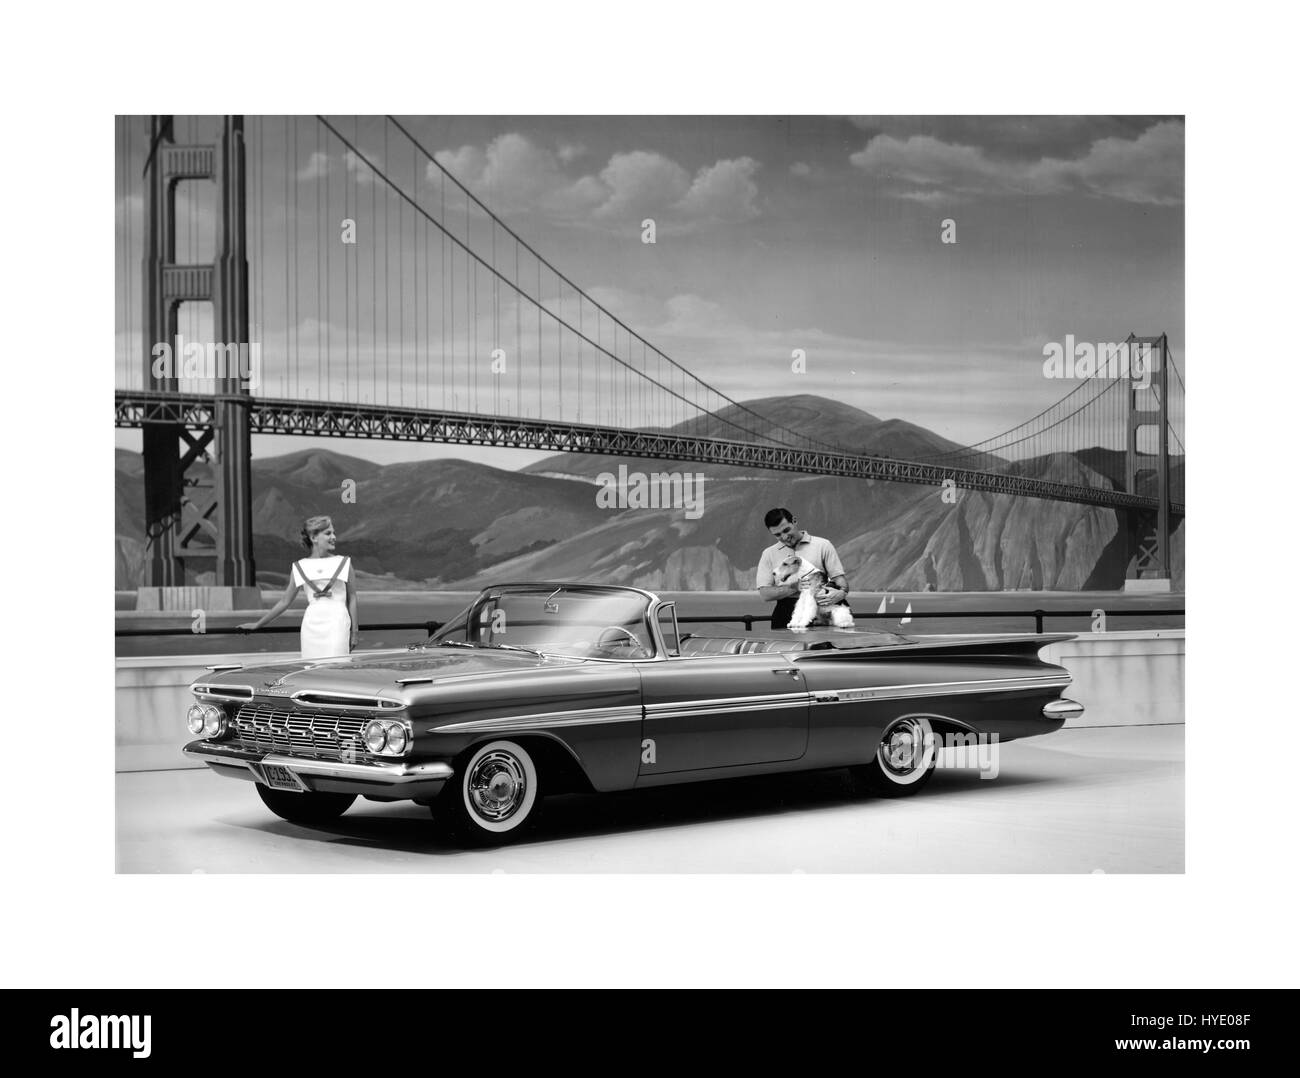 1959 Chevrolet Impala 2 door convertible with San Francisco Golden Gate Bridge behind a full-size convertible car built by Chevrolet Motor Company Stock Photo